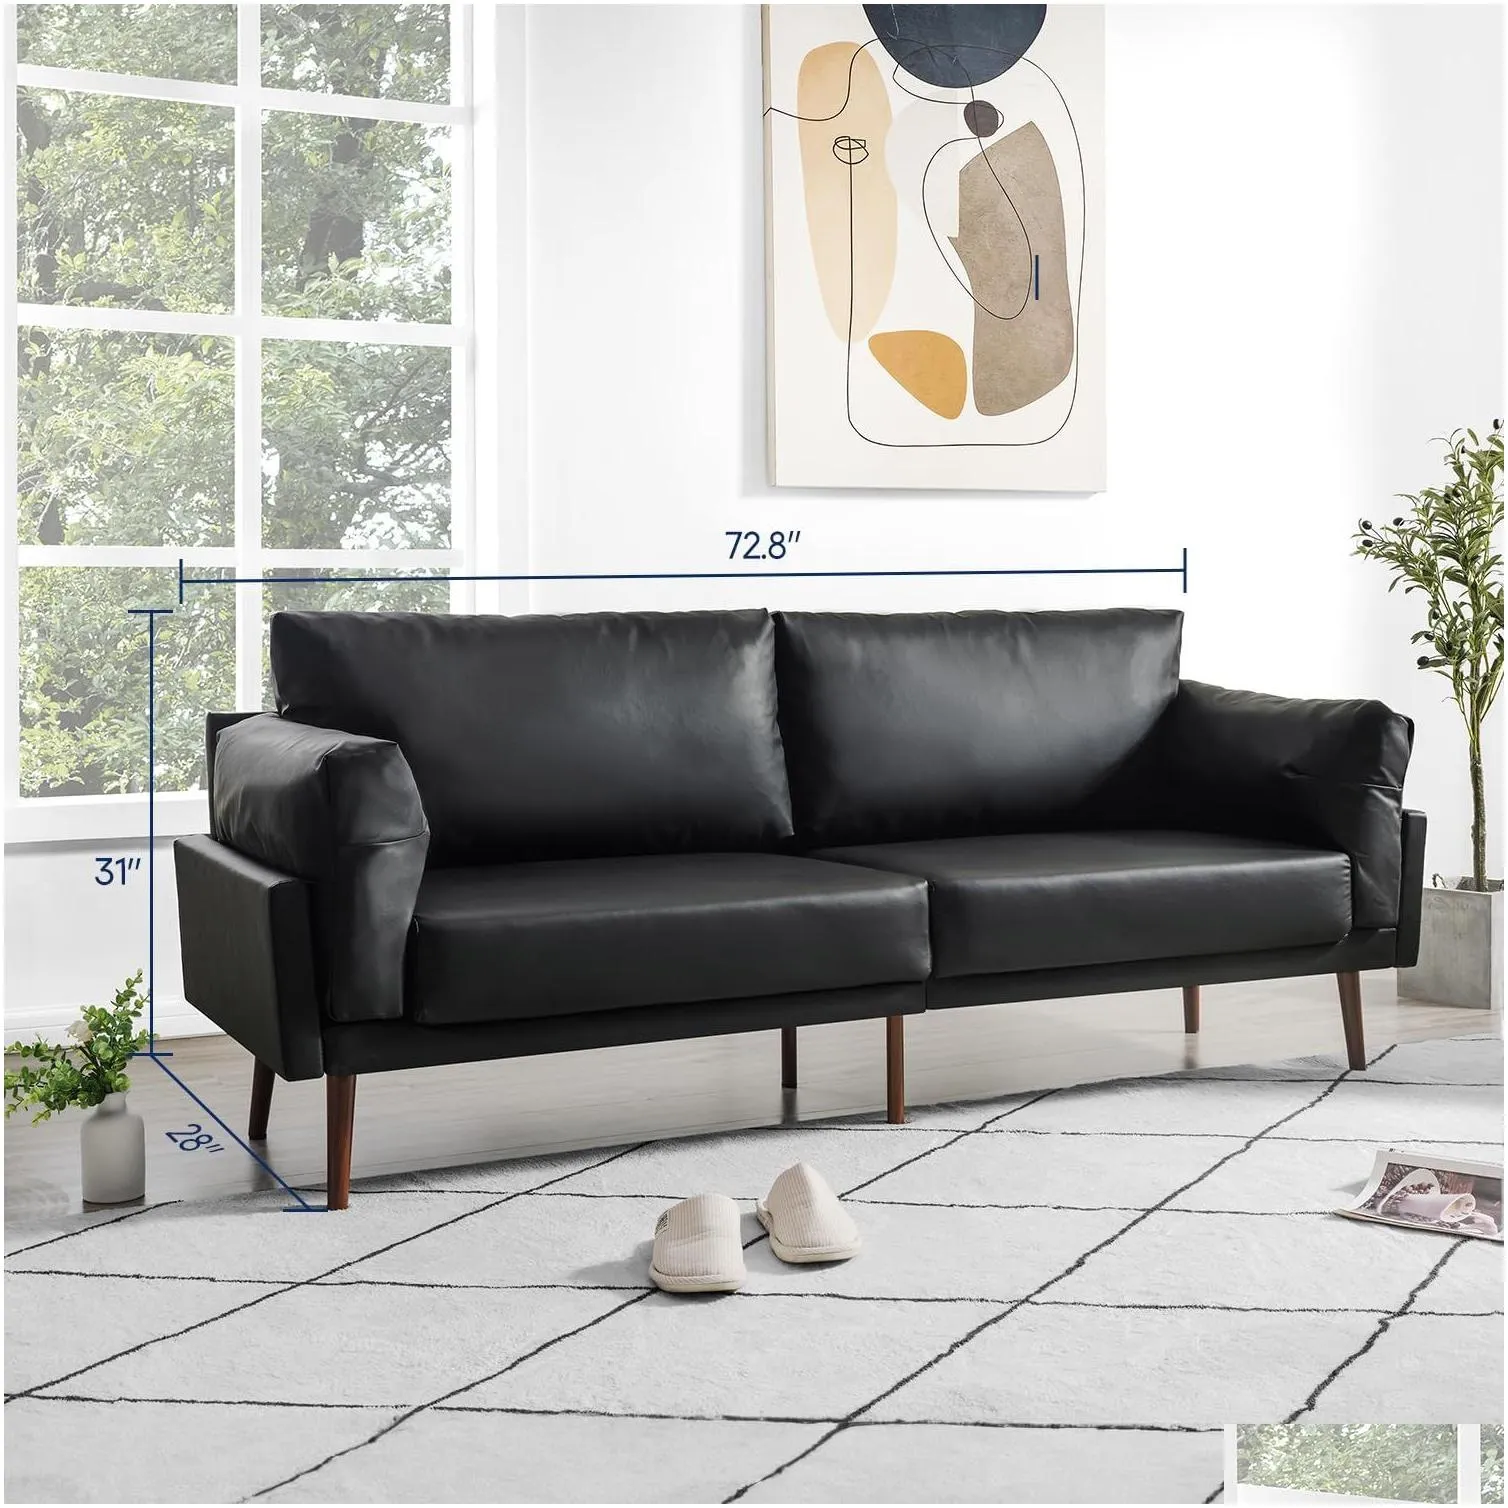 Vonanda Flora Sofa, Faux leather sofa Caramel, 3 seat sofa with soft cloud cushion, 72 inch sofa durable in small space, house, living